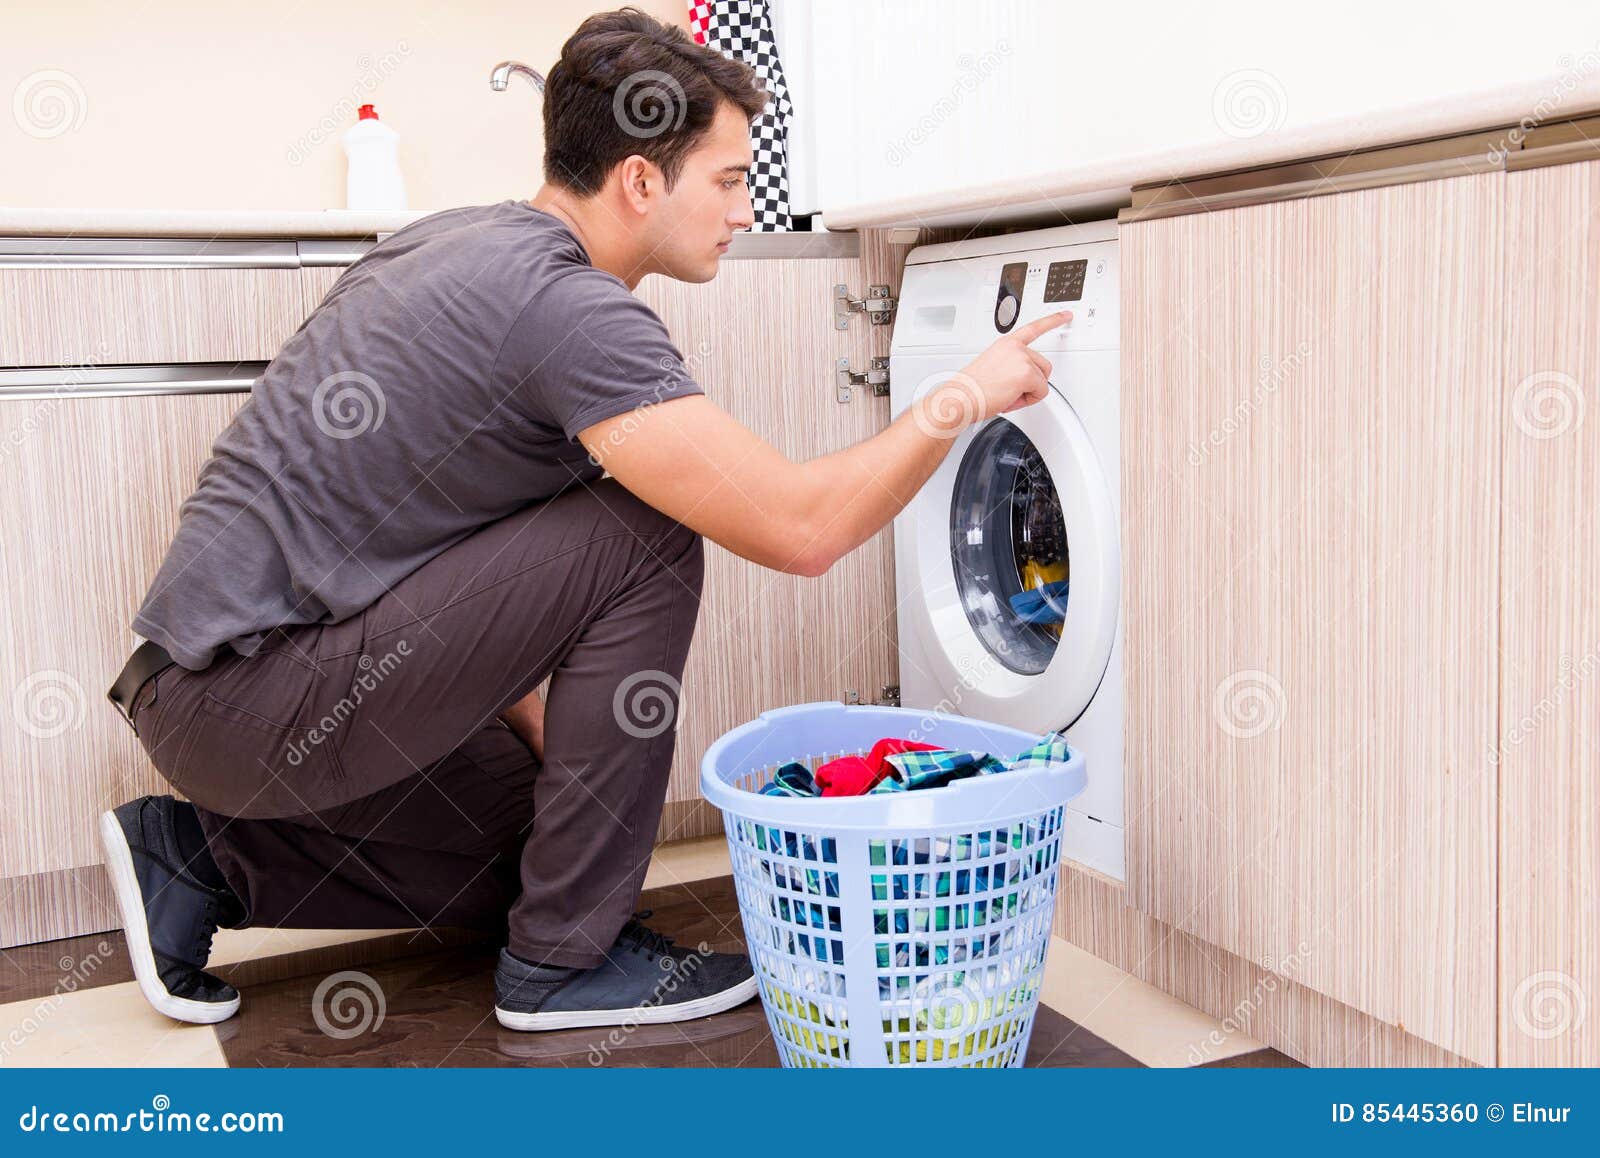 Did the laundry. Laundry man. Стирка Мэн. Муж стирает. Castletown man Laundry.